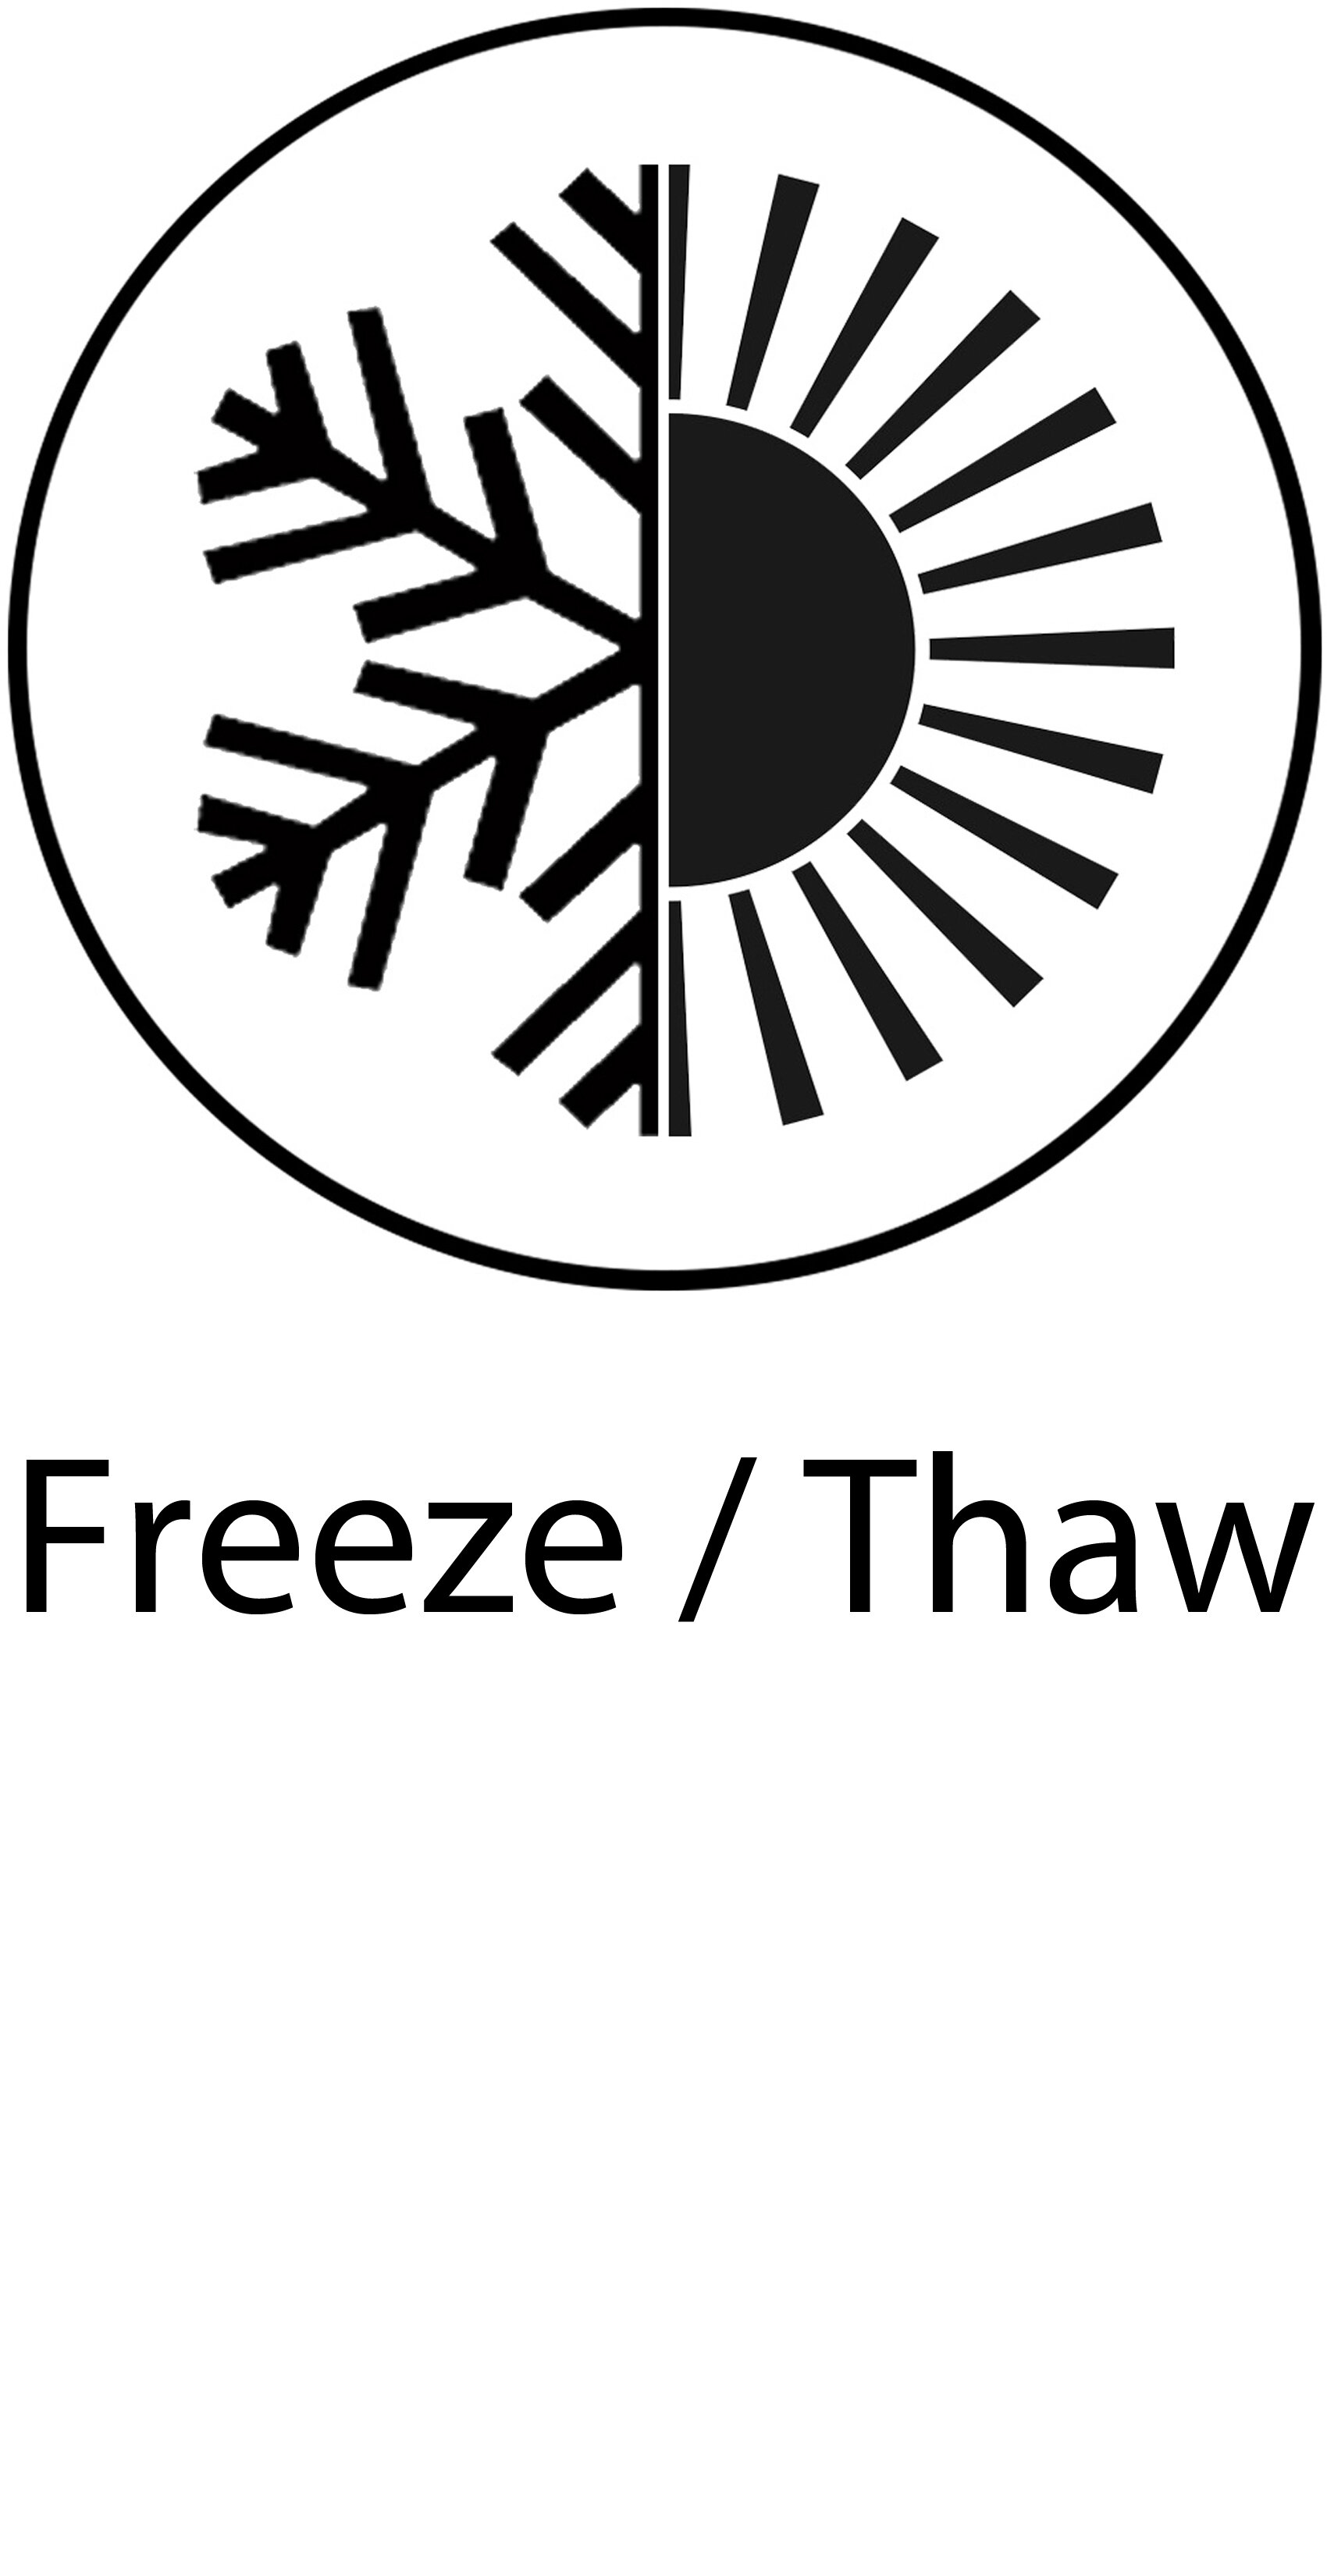 02_Freeze Thaw.jpg